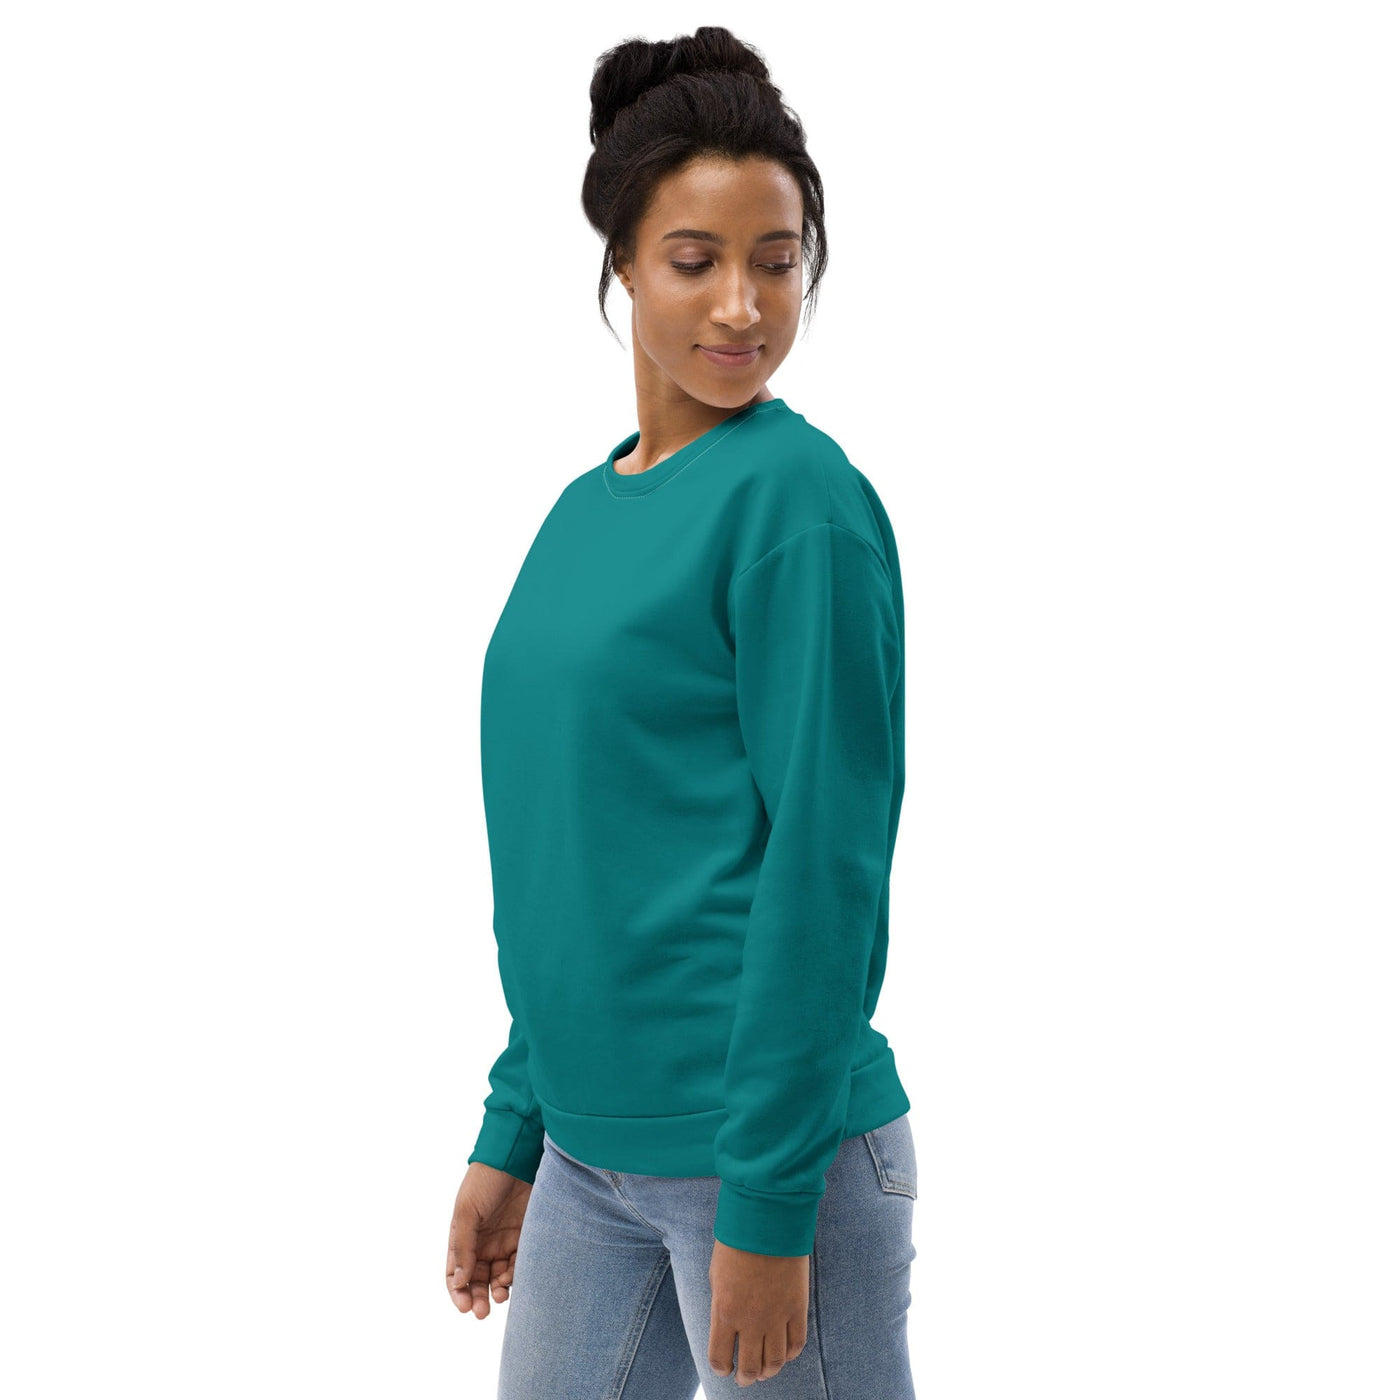 Graphic Sweatshirt For Women Dark Teal Green